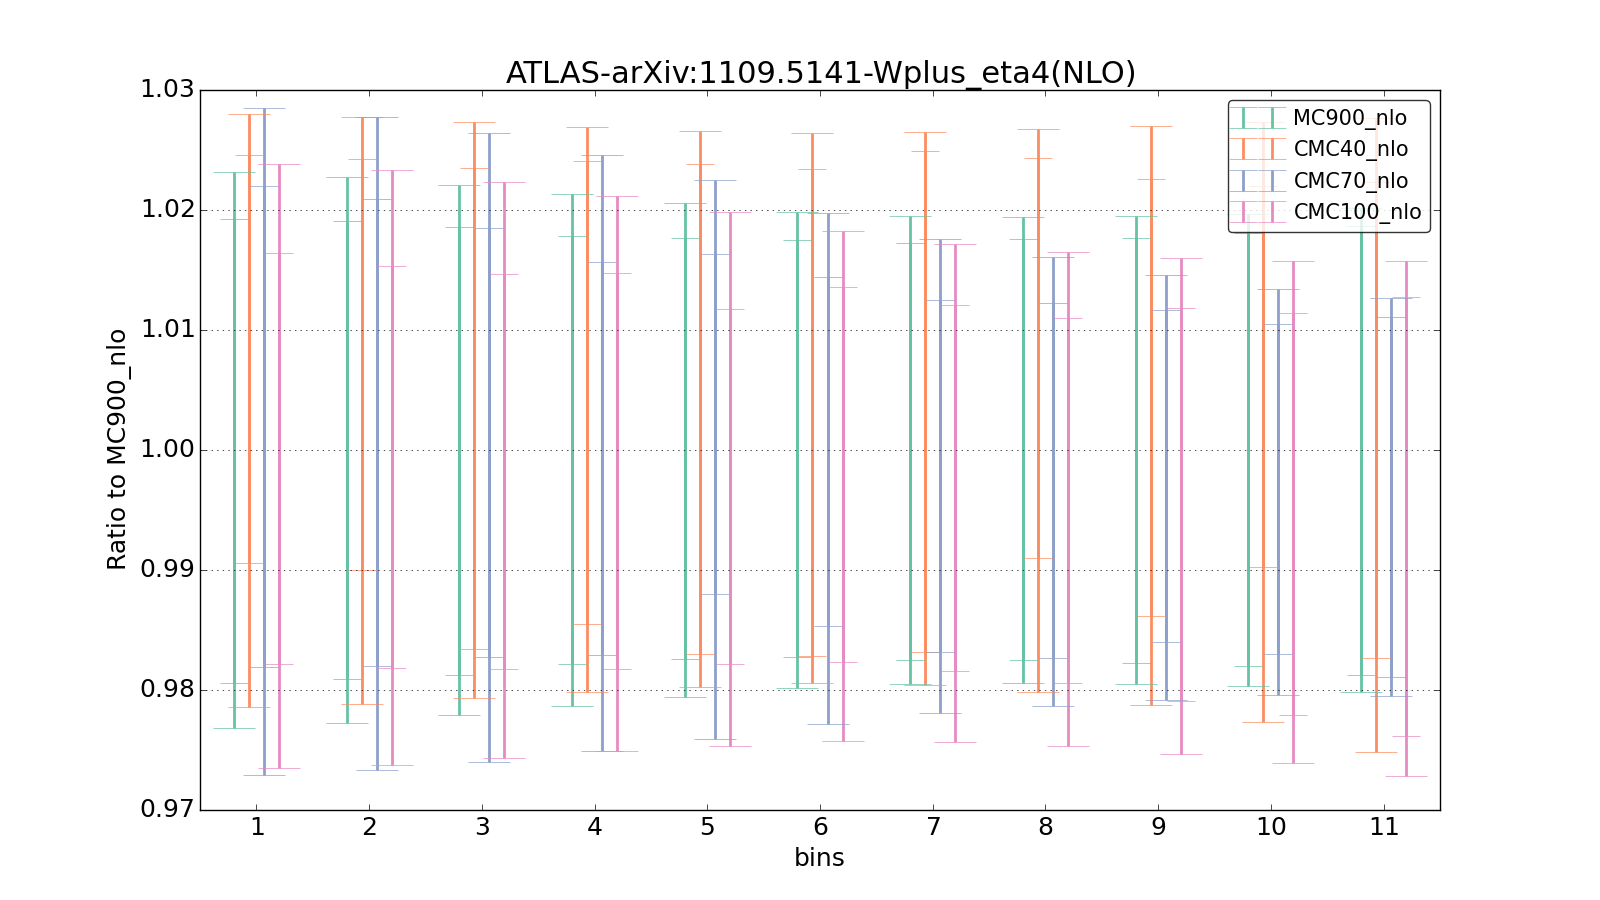 figure plots/CMCpheno/group_1_ciplot_ATLAS-arXiv:11095141-Wplus_eta4(NLO).png